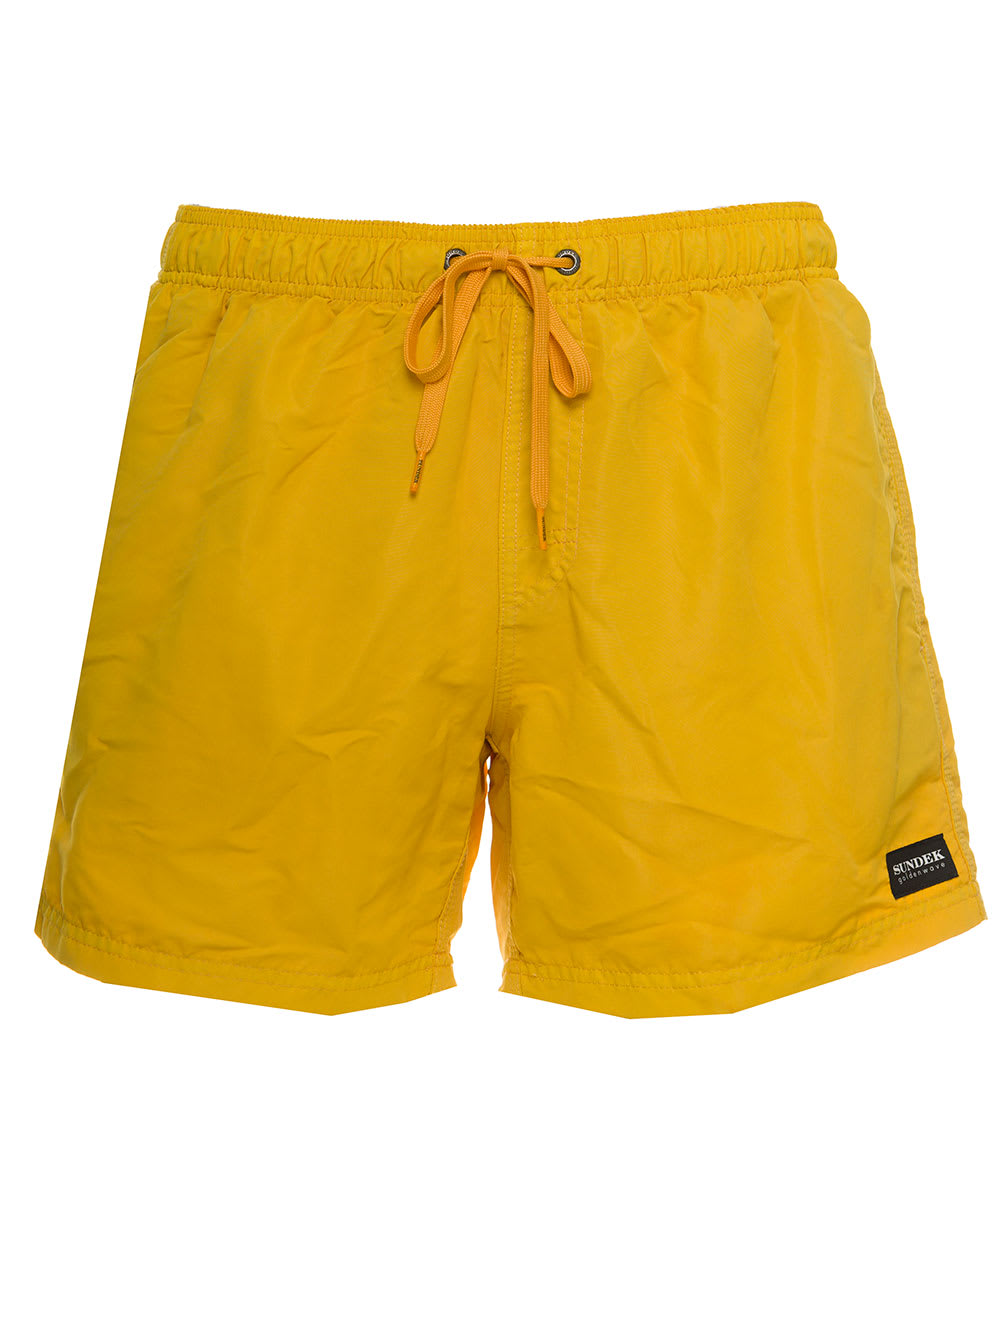 Sundek Mens Yellow Nylon Beach Shorts